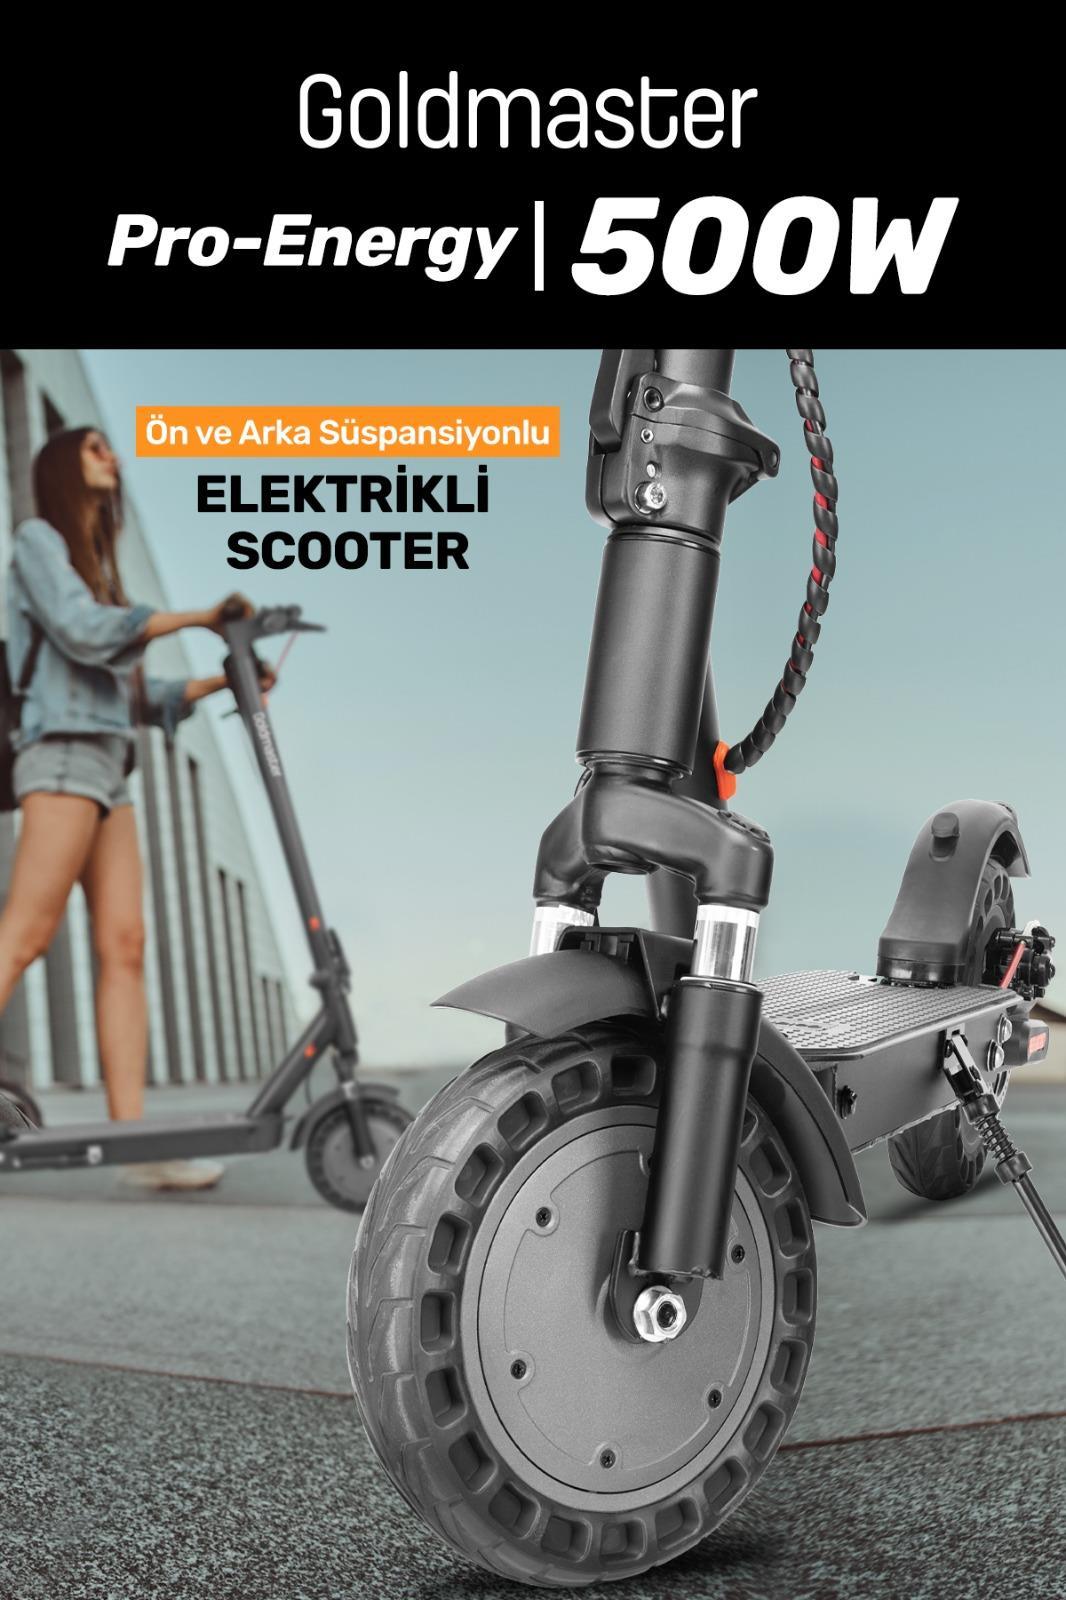 GOLDMASTER Pro-Energy 500W Ön Arka Süspansiyon 10" Patlamaz Tekerlikli Elektrikli  Scooter